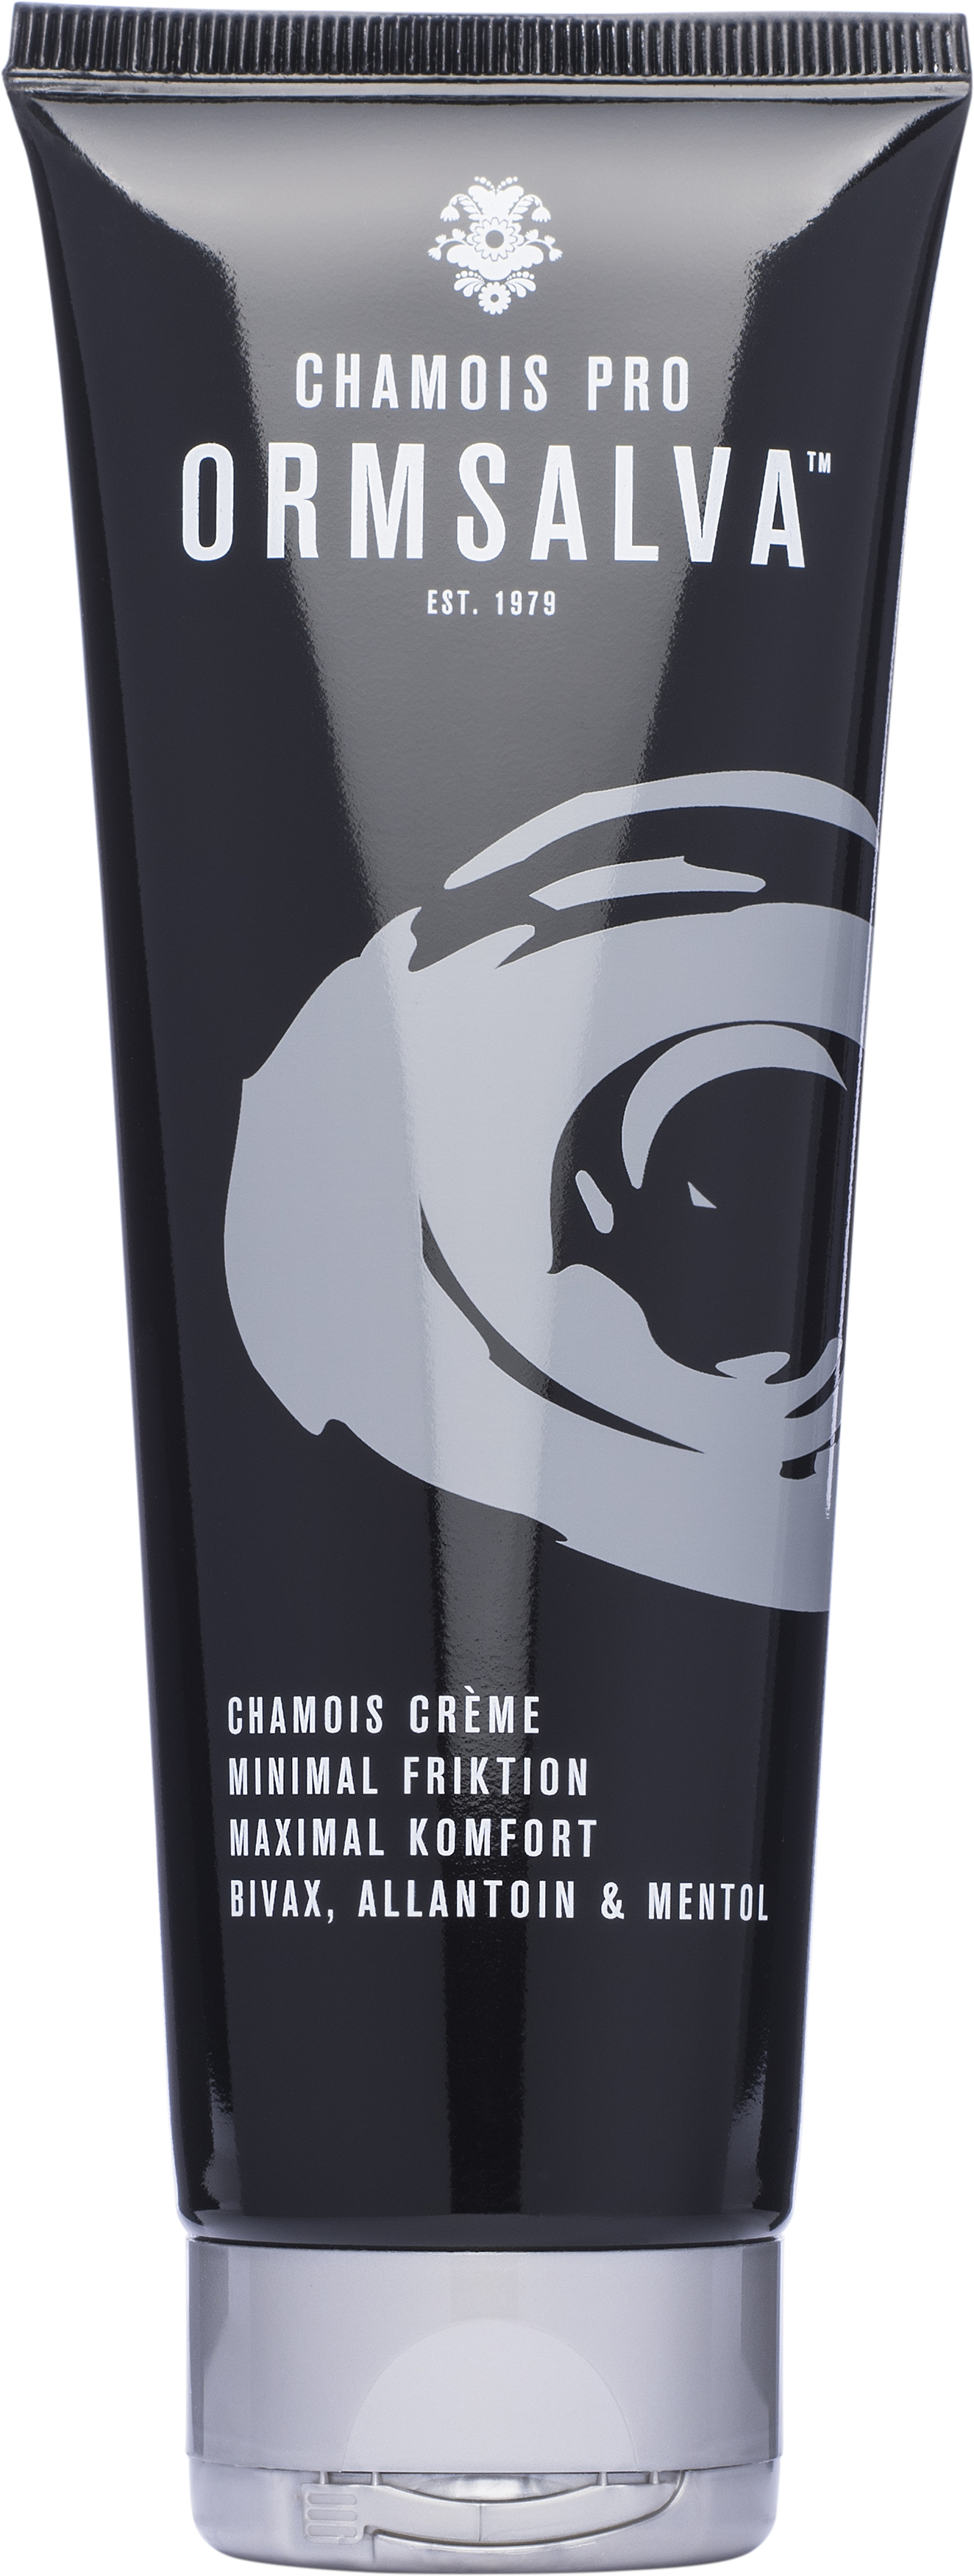 Ormsalva Chamois Creme 125 ml